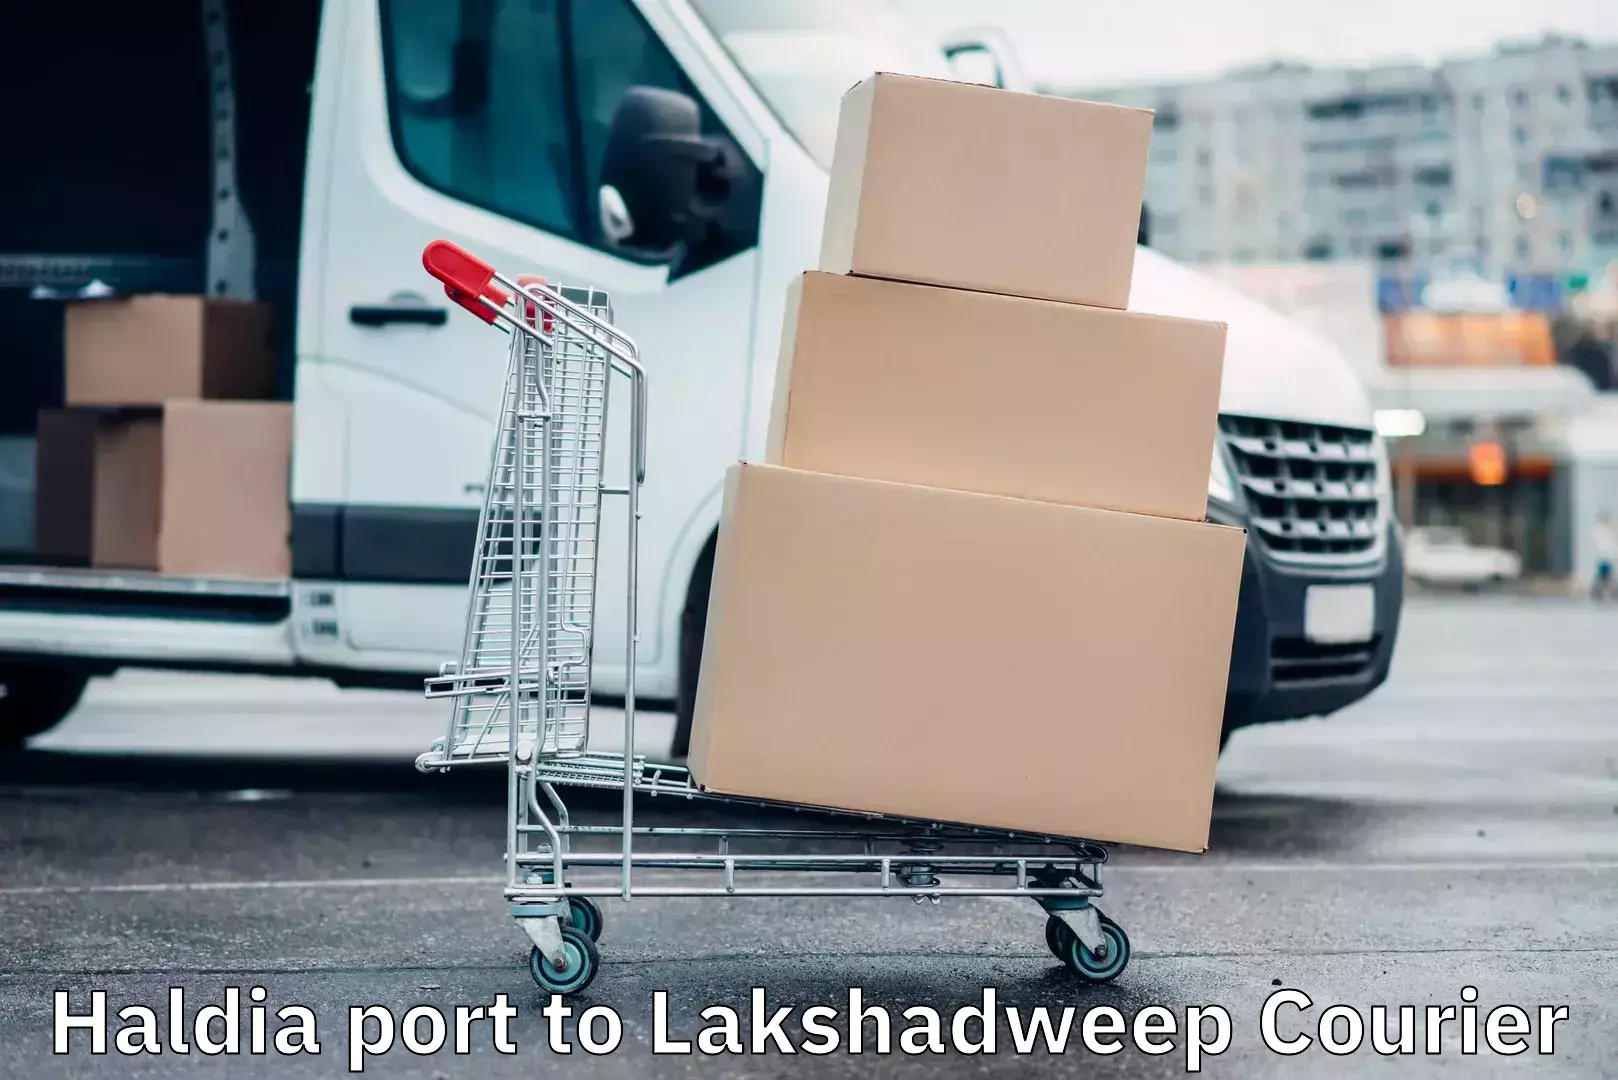 Flexible parcel services Haldia port to Lakshadweep